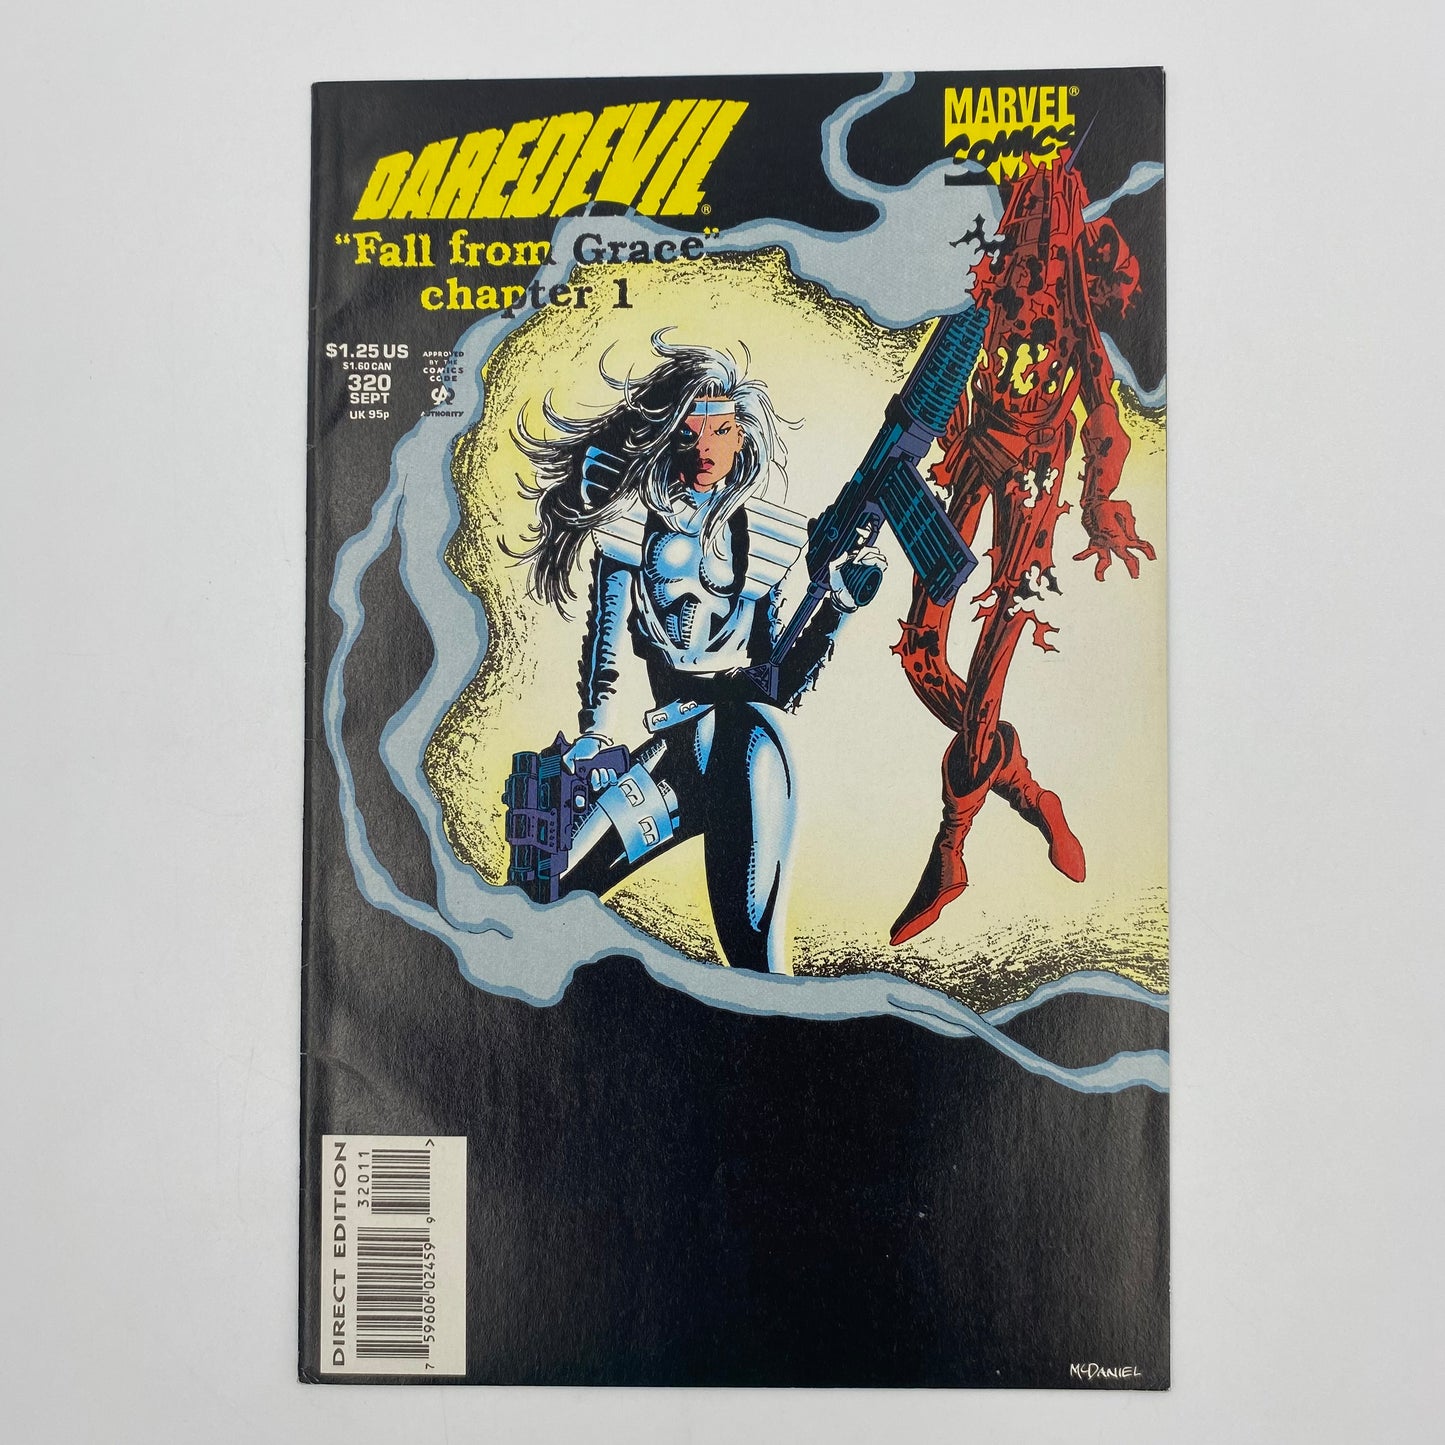 Daredevil #319-325 “Fall from Grace” (1993-1994) Marvel